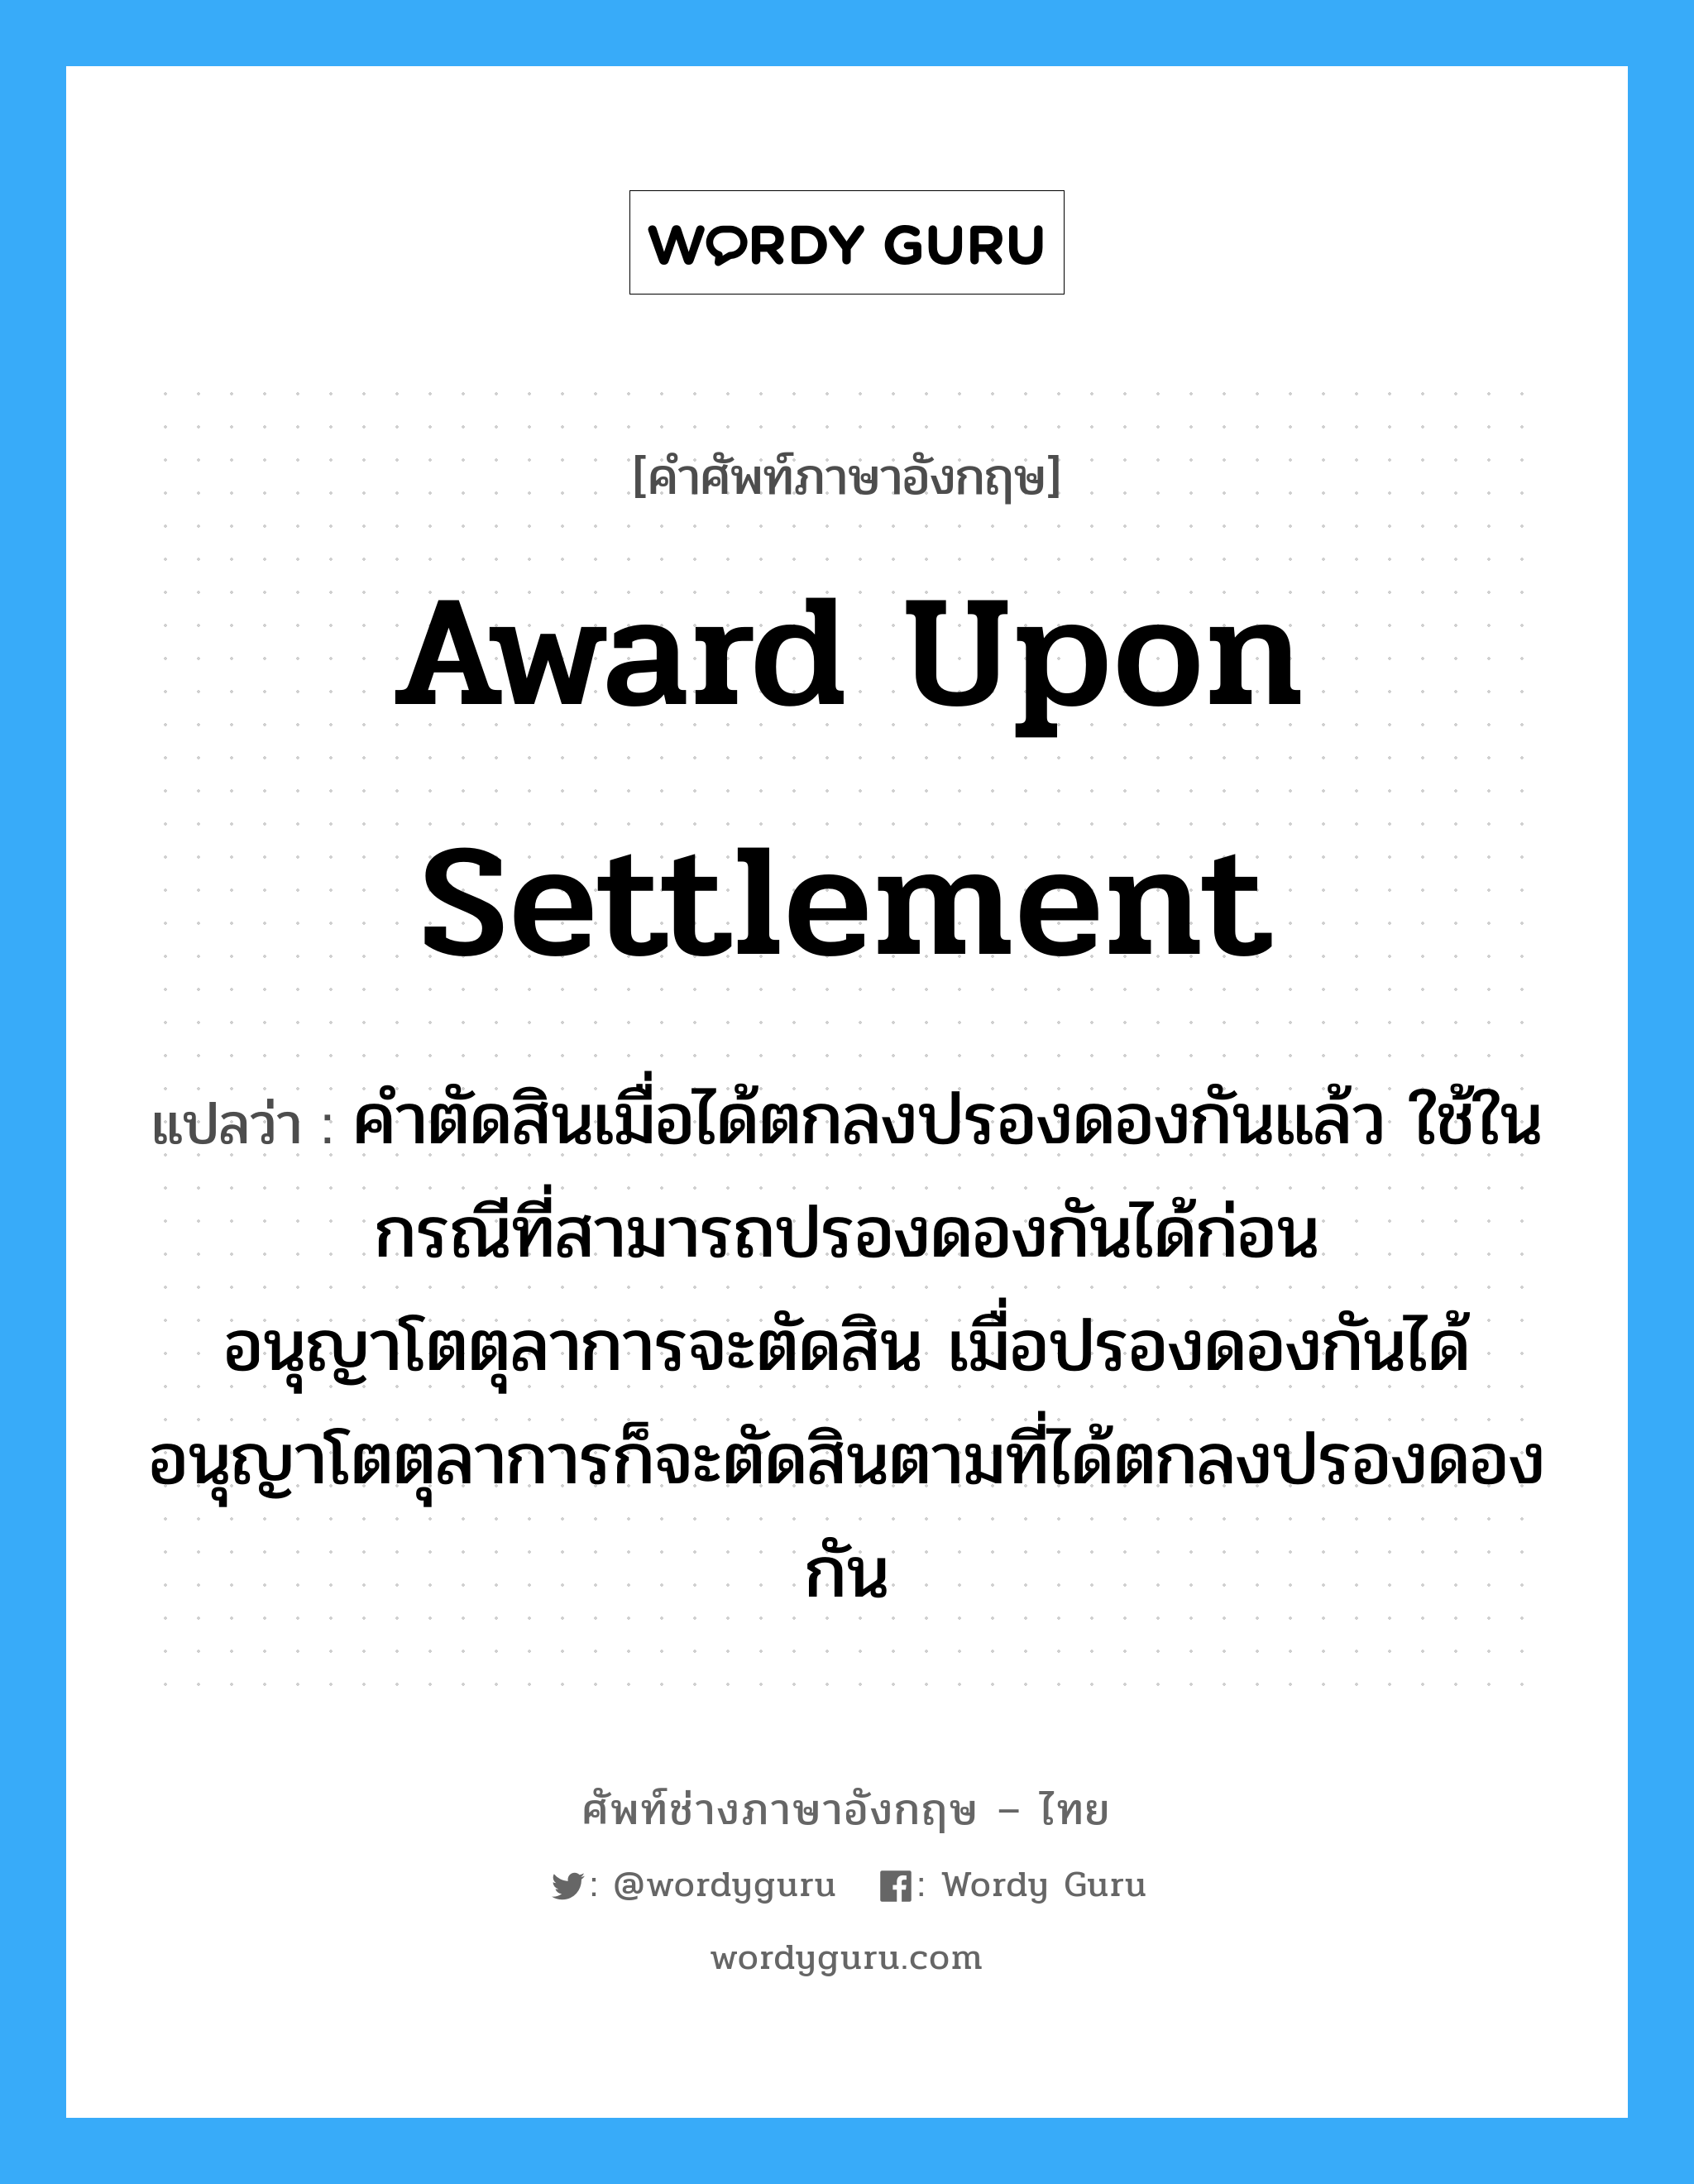 Award upon Settlement แปลว่า?, คำศัพท์ช่างภาษาอังกฤษ - ไทย Award upon Settlement คำศัพท์ภาษาอังกฤษ Award upon Settlement แปลว่า คำตัดสินเมื่อได้ตกลงปรองดองกันแล้ว ใช้ในกรณีที่สามารถปรองดองกันได้ก่อนอนุญาโตตุลาการจะตัดสิน เมื่อปรองดองกันได้อนุญาโตตุลาการก็จะตัดสินตามที่ได้ตกลงปรองดองกัน